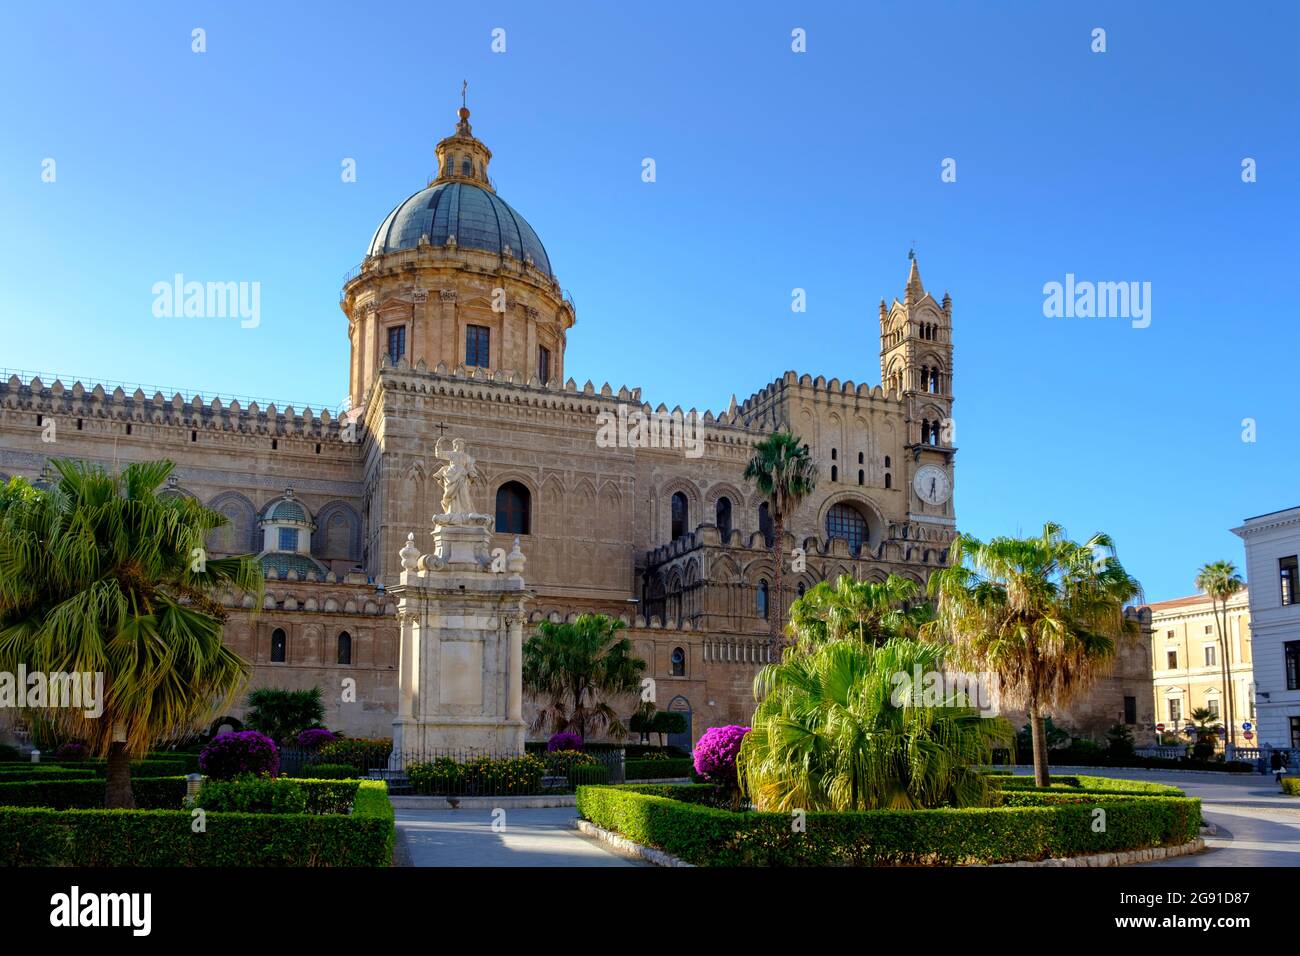 Dom von Palermo, die Kathedrale Maria Santissima Assunta, Palermo, Sizilien, Italien Stock Photo